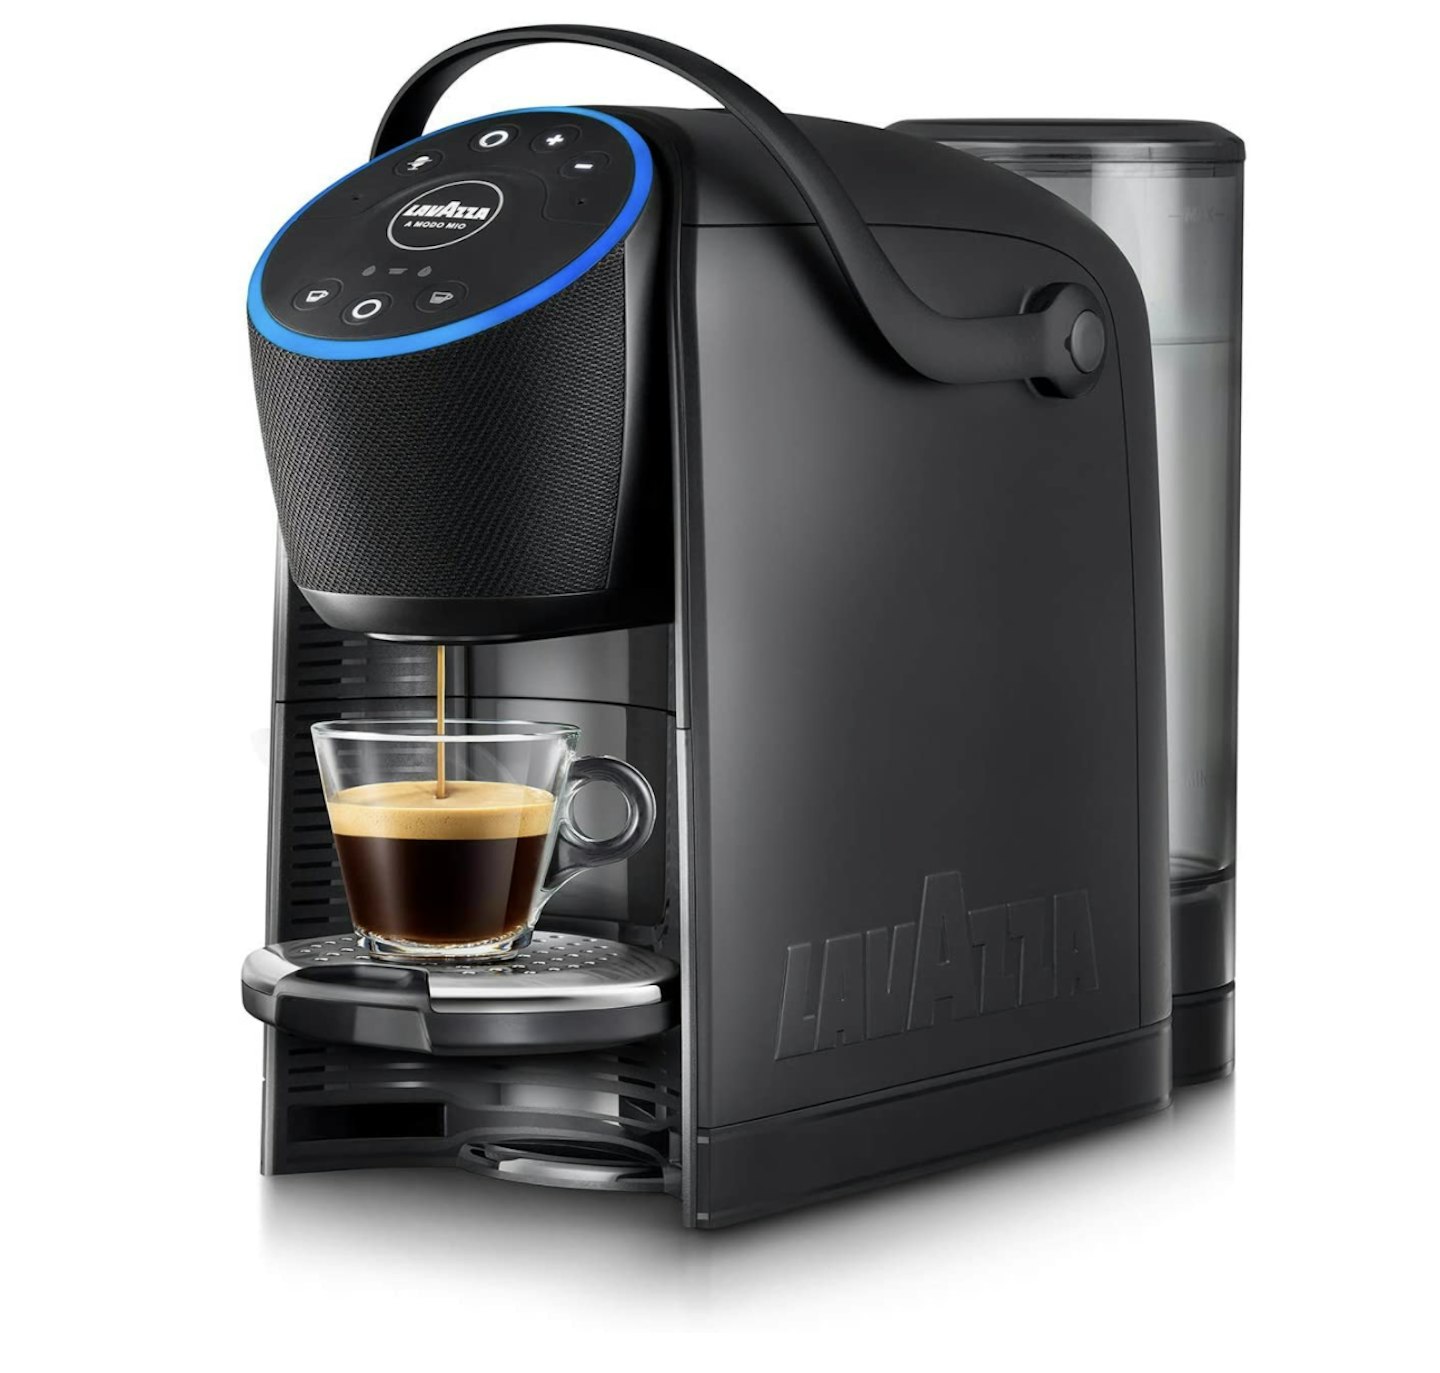 Lavazza Launches World's First Alexa Coffee Machine